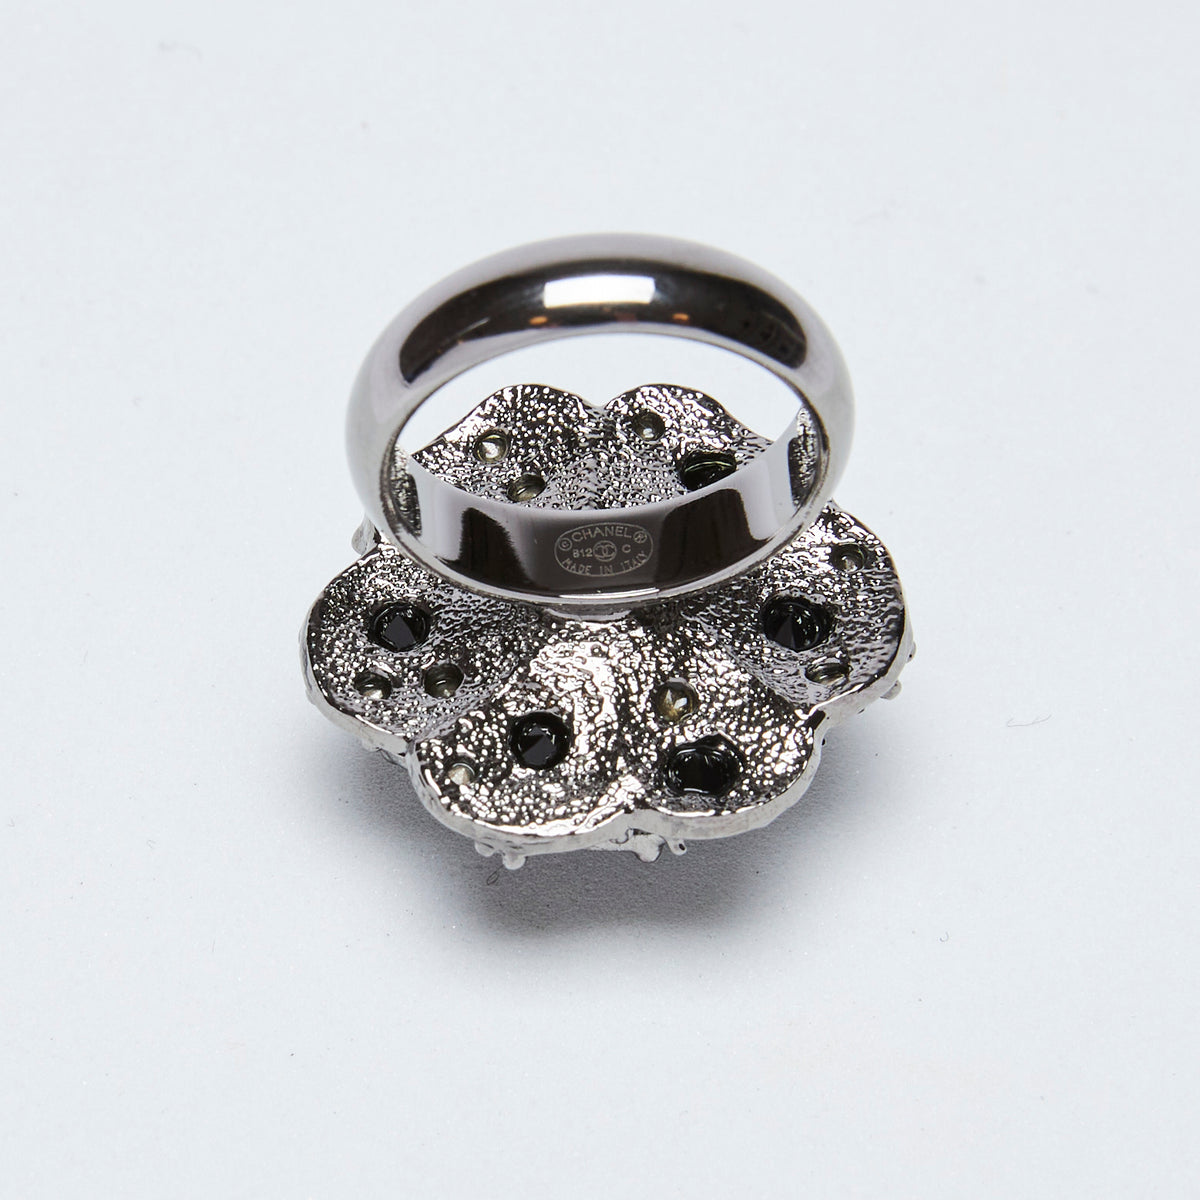 Excellent Pre-Loved Black Crystal Embellished Ring with Dark Shiny Silver Hardware(stamp)